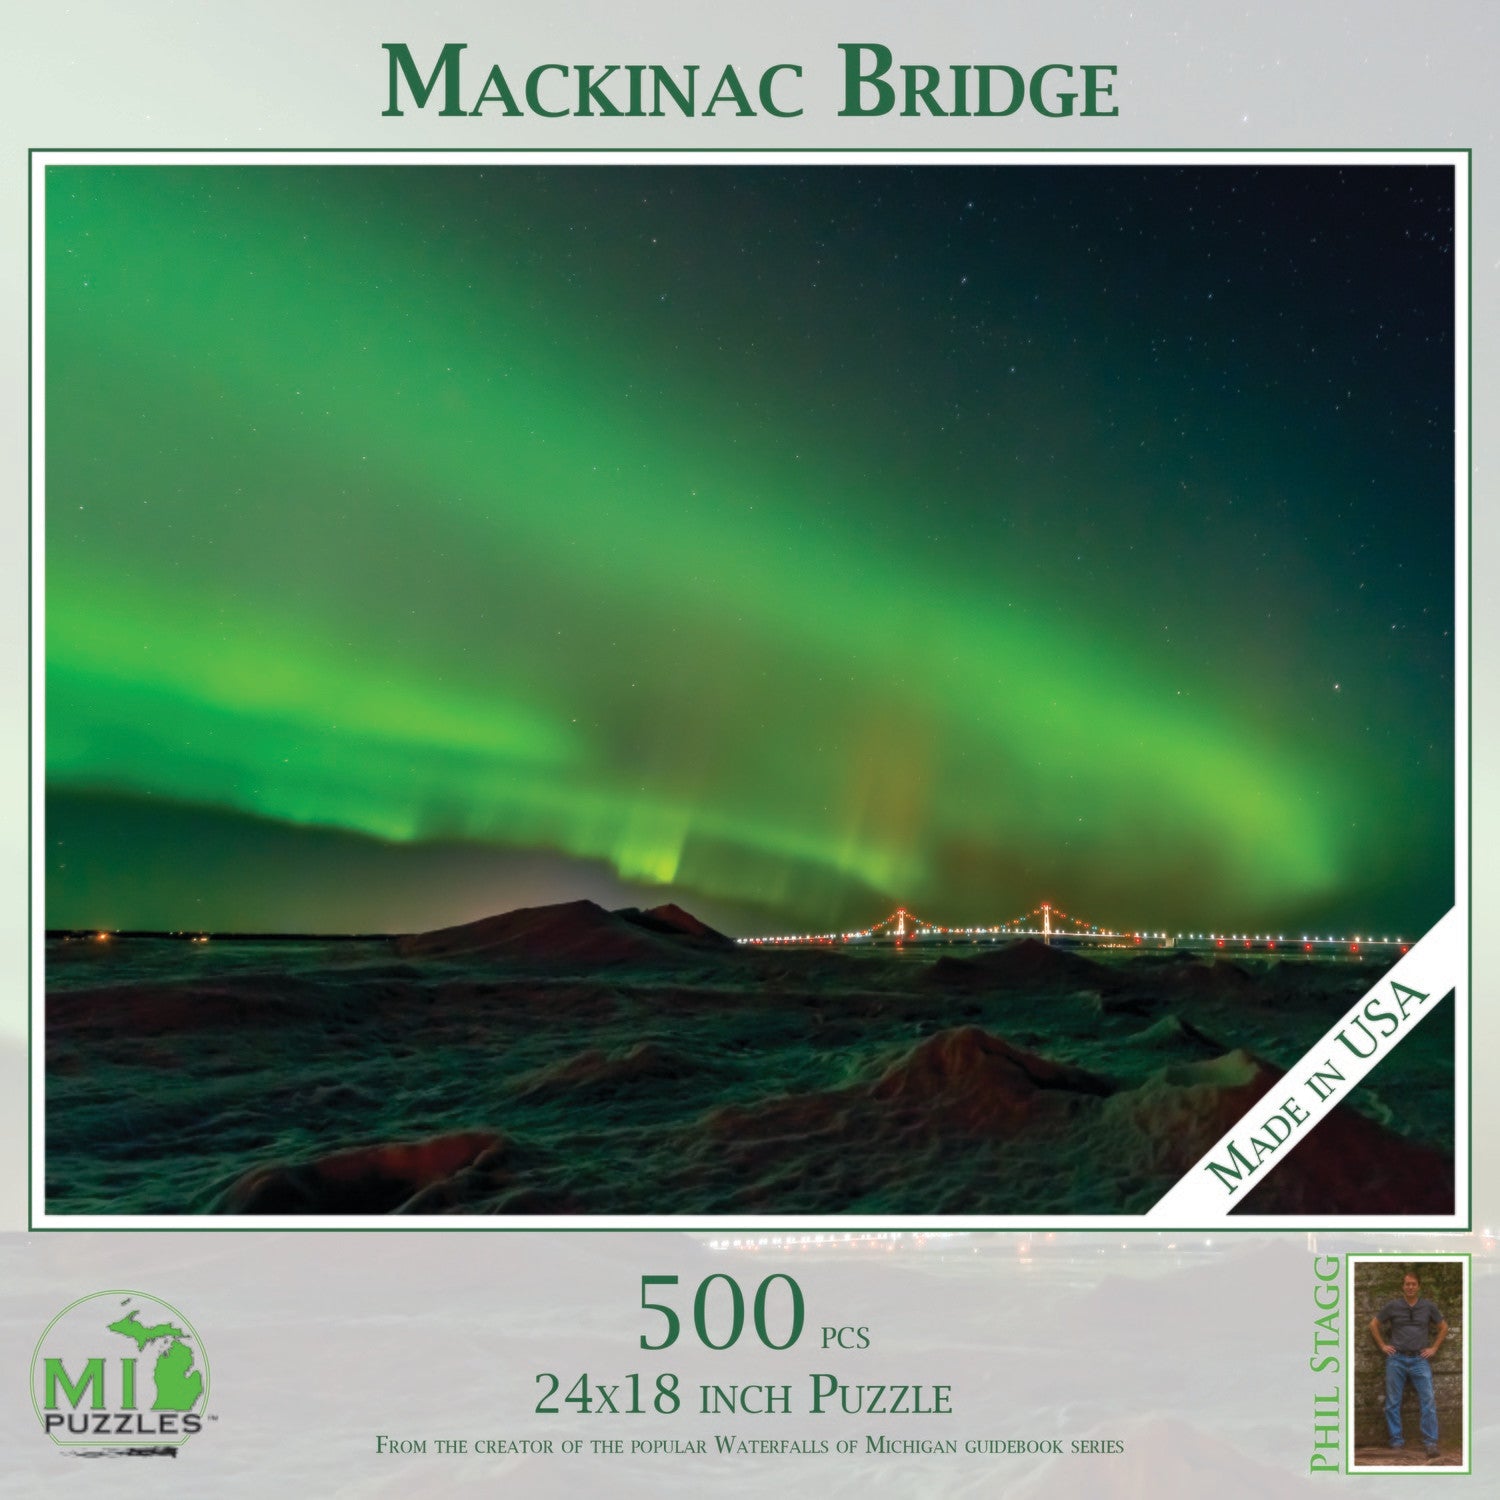 Mackinac Bridge with Northern Lights Puzzle - 500 pcs